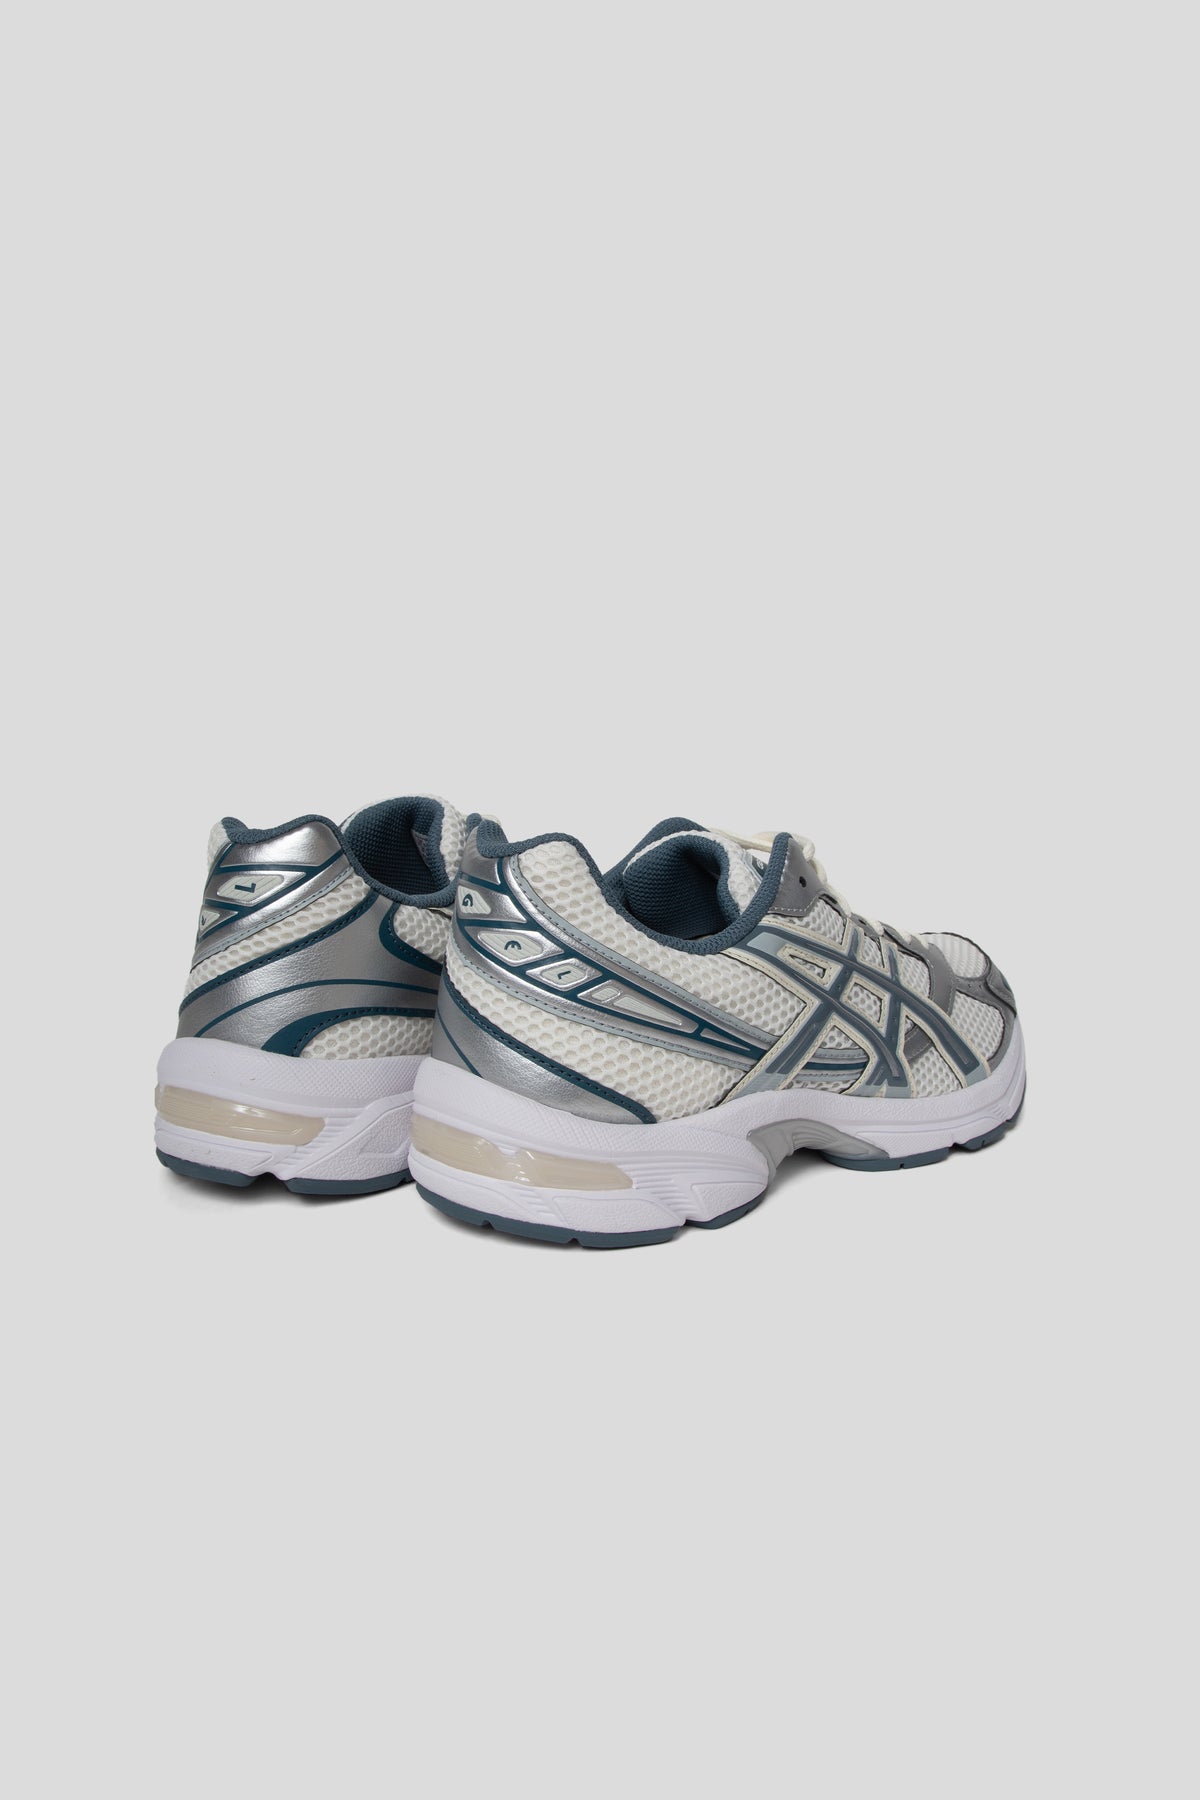 Asics Gel-1130 Shoe in Cream and Iron Clad